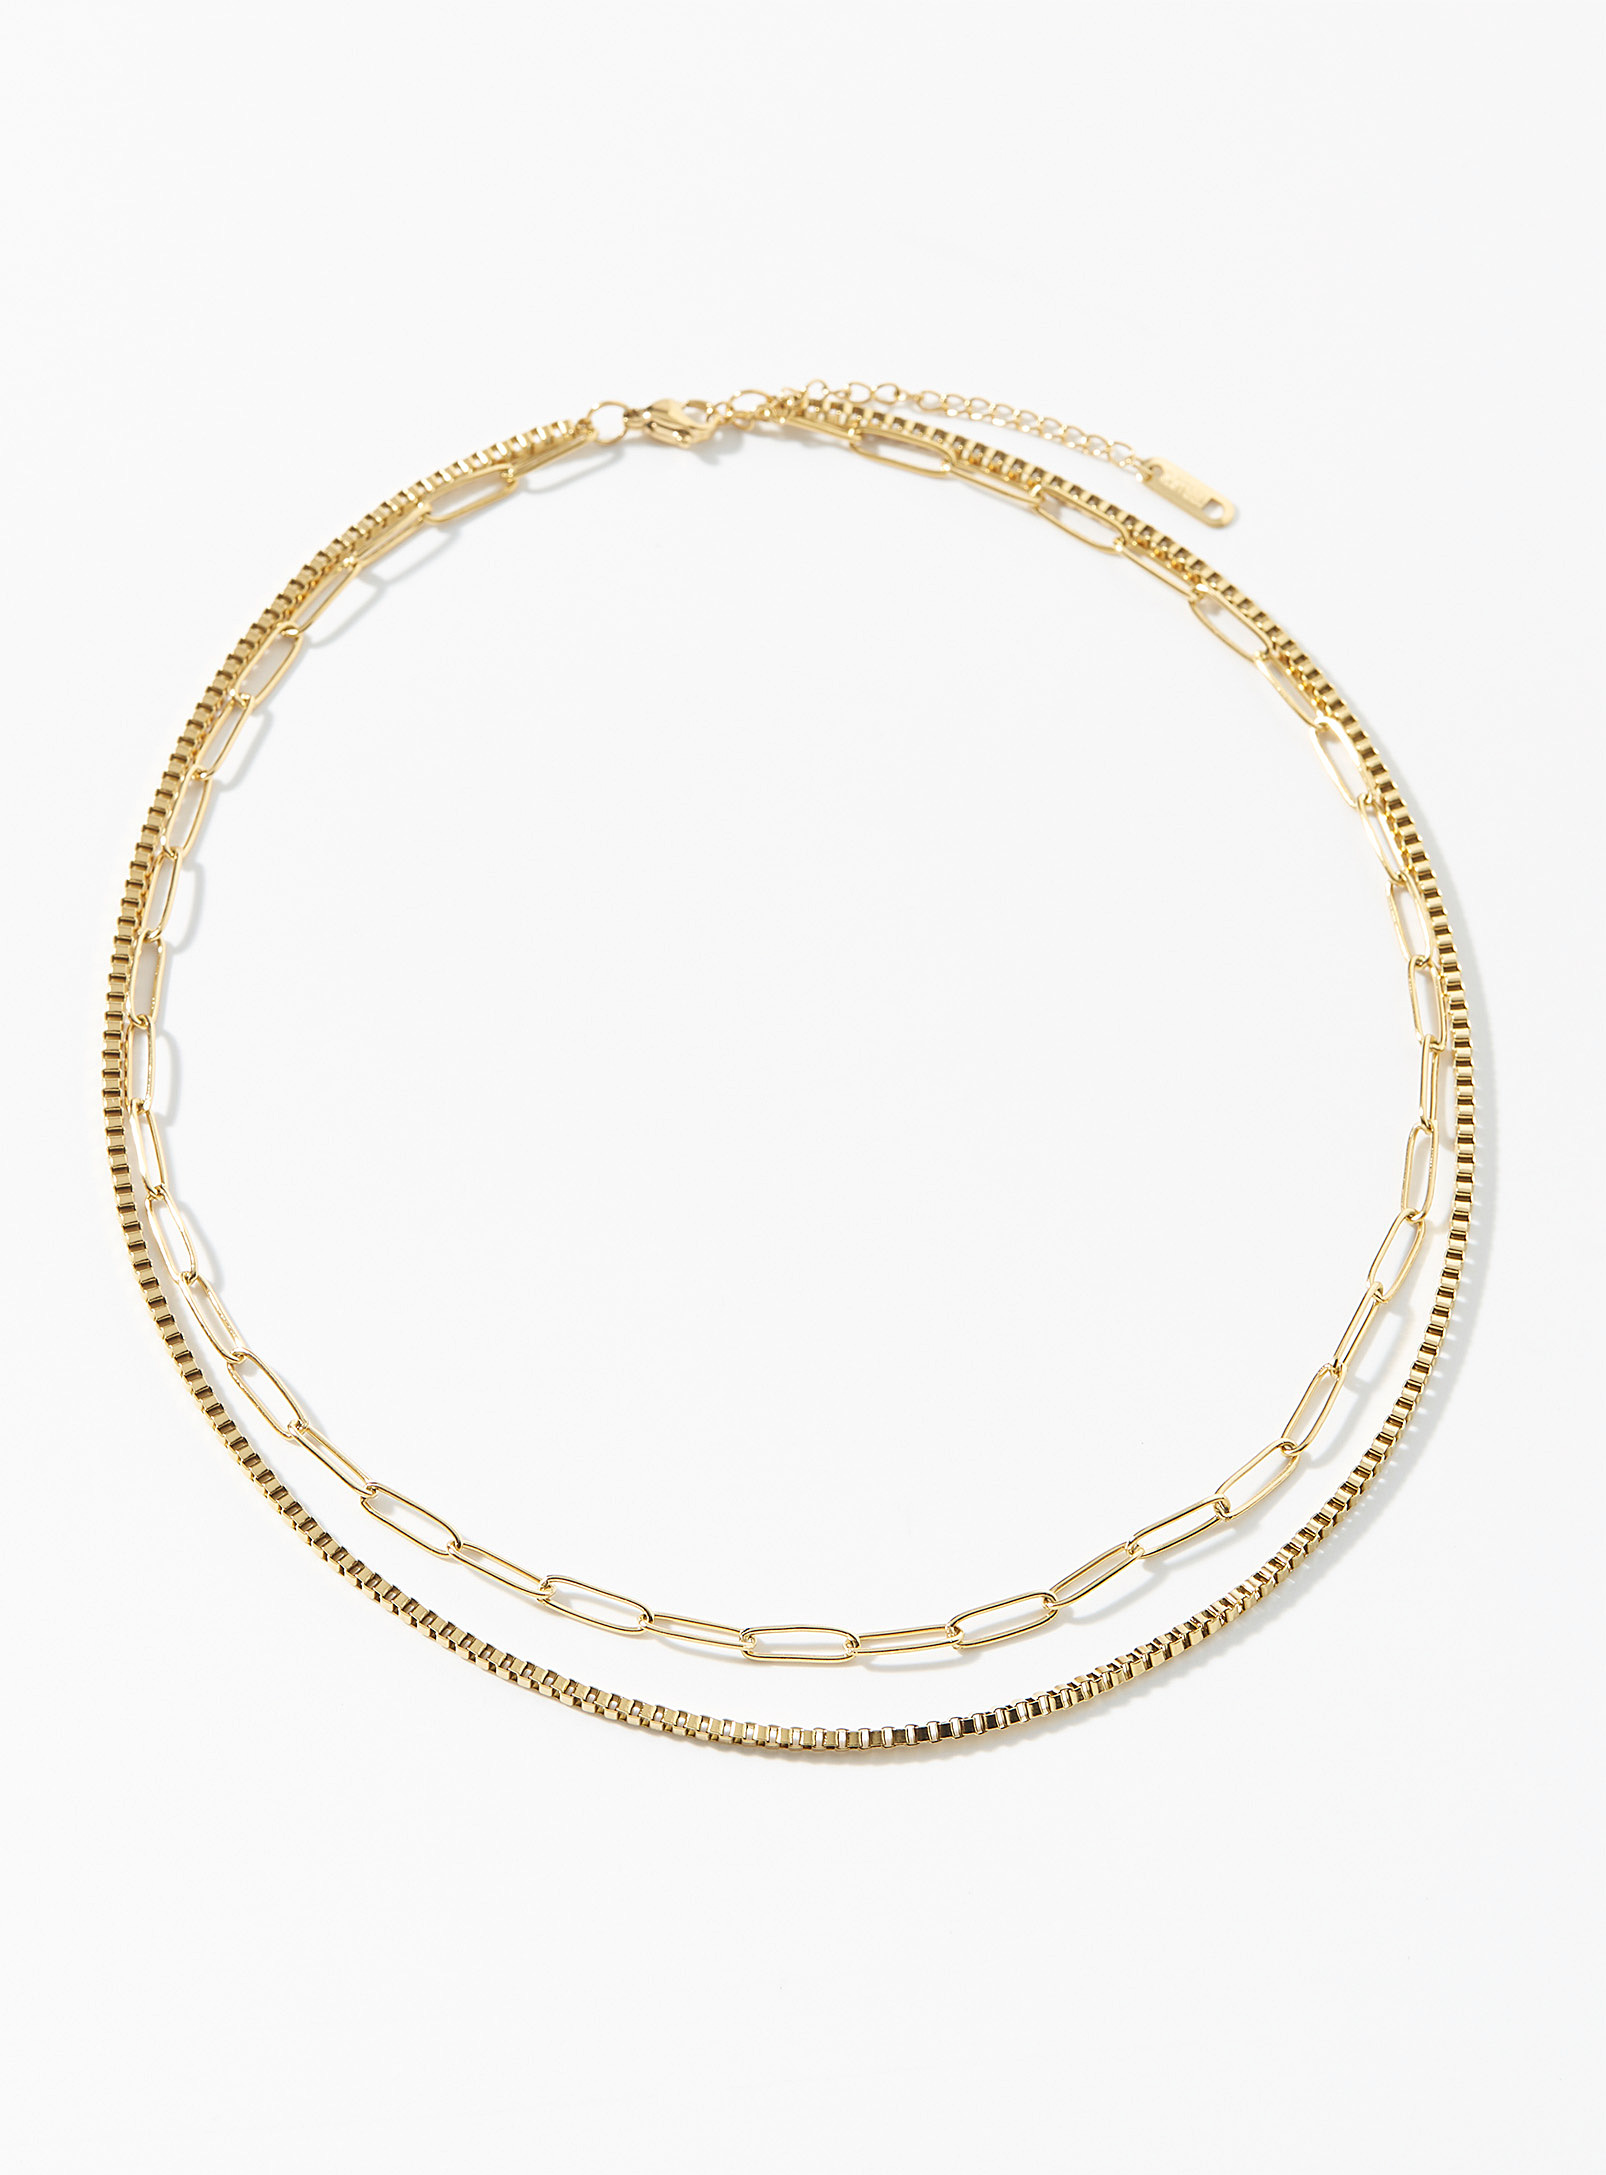 Simons - Women's Double-row golden necklace